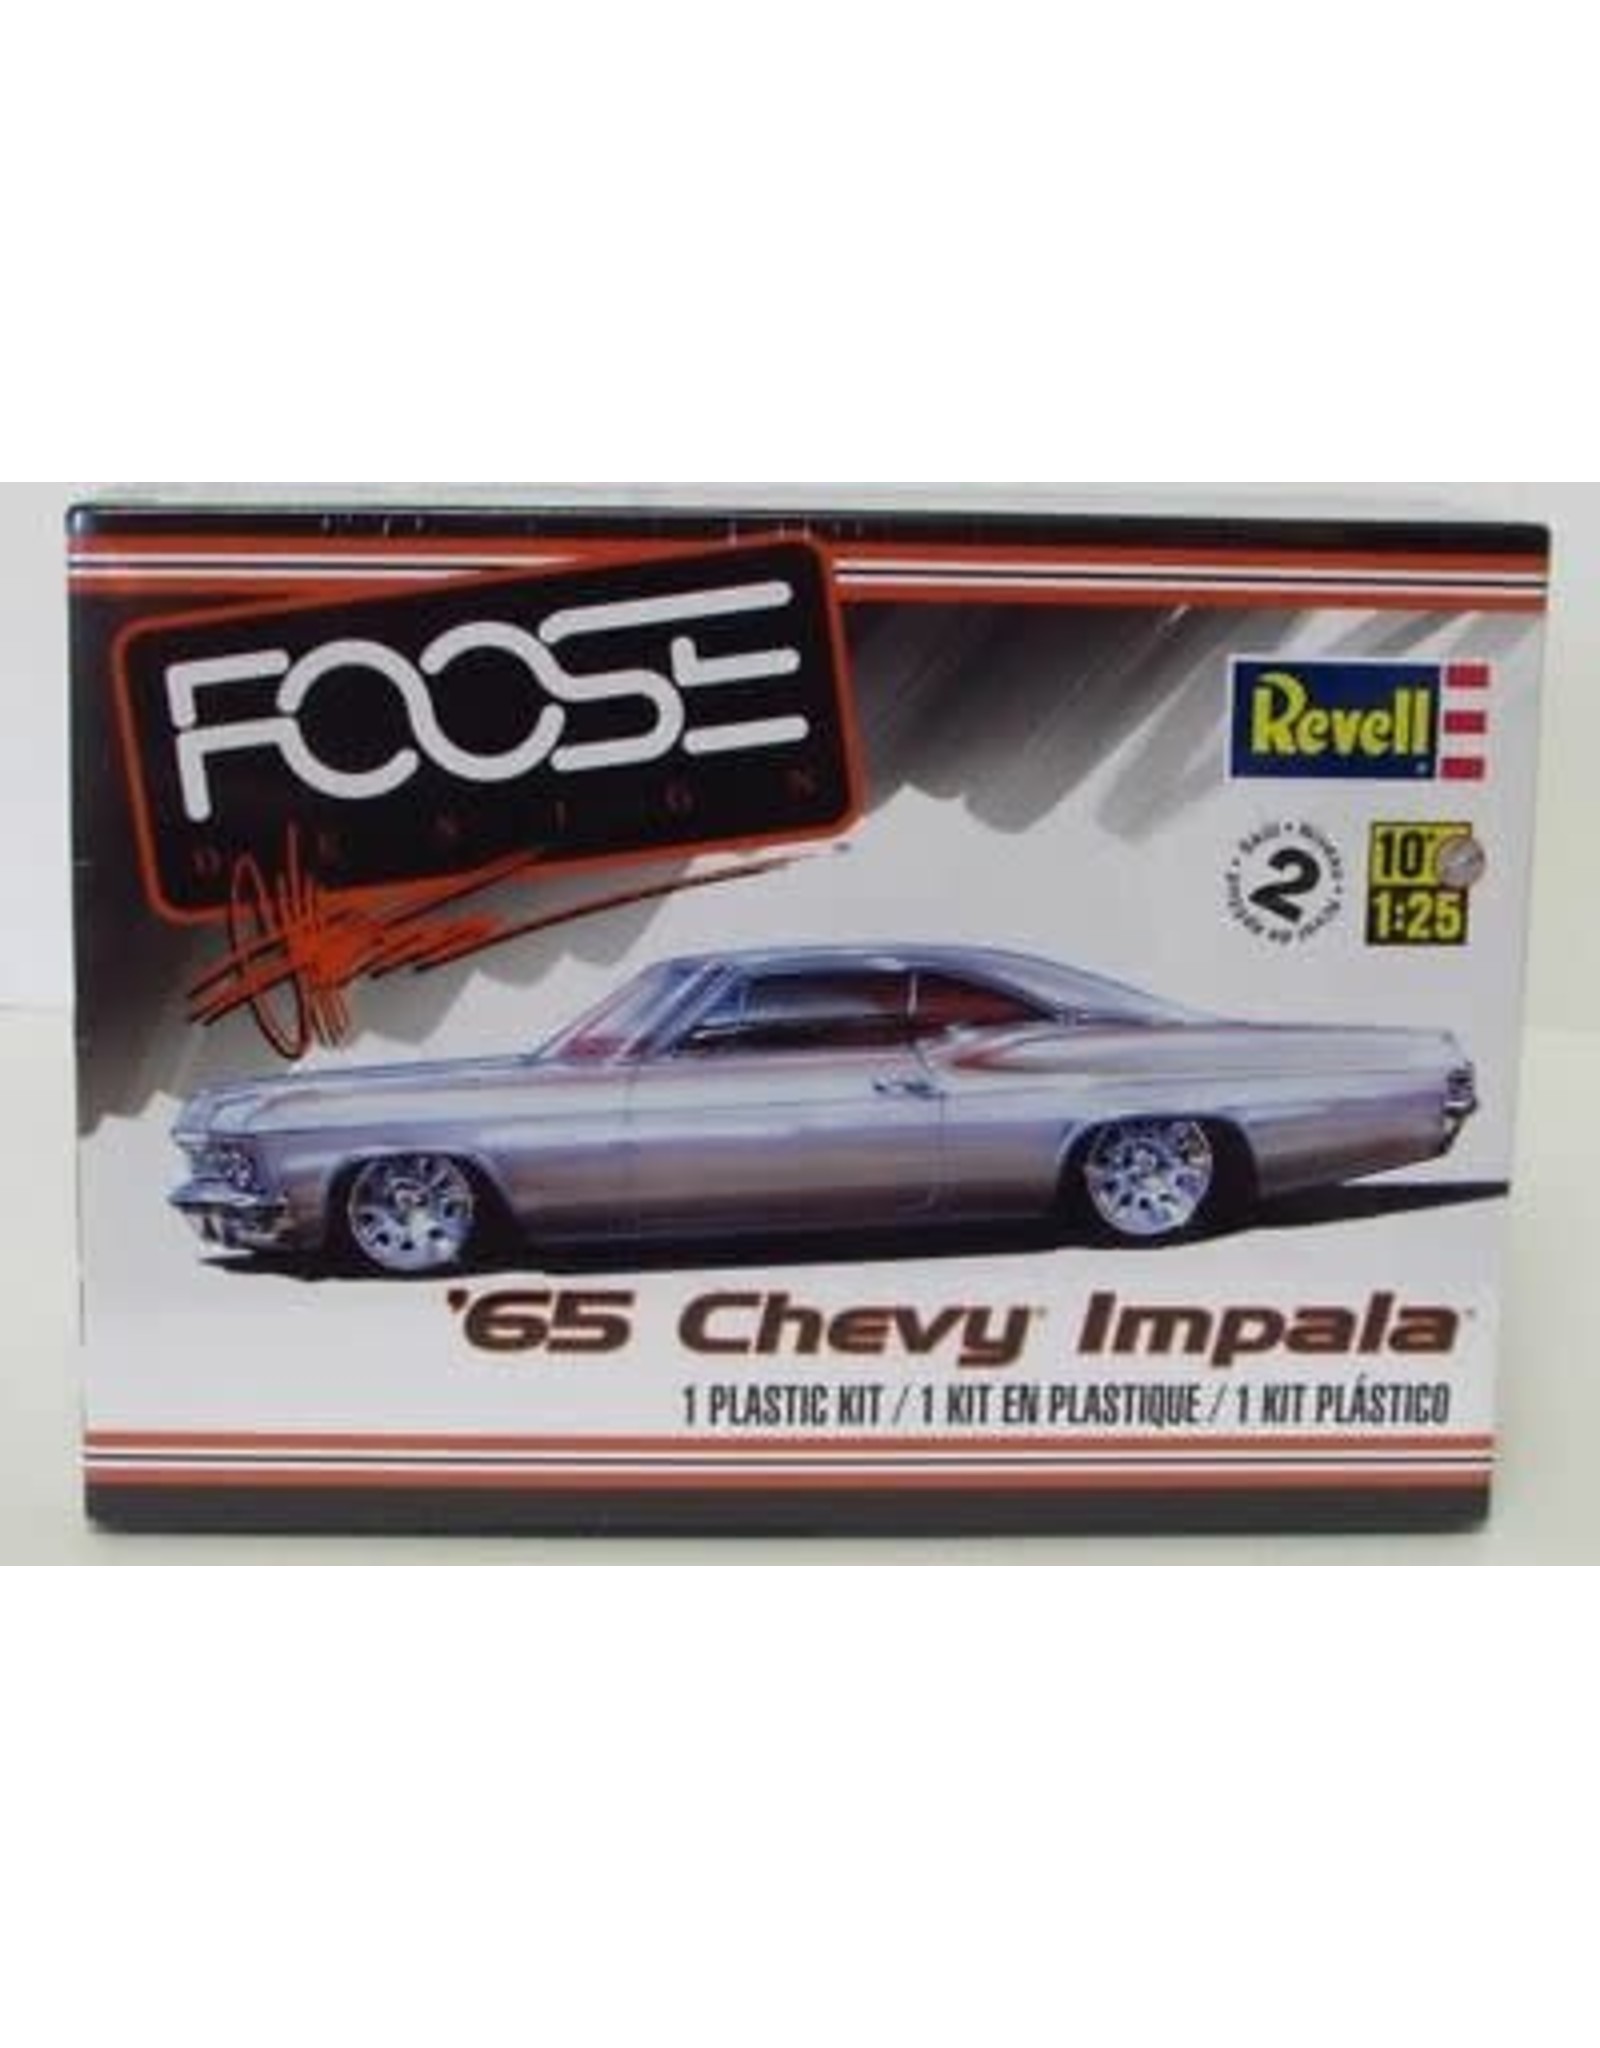 Revell '65 chevy impala